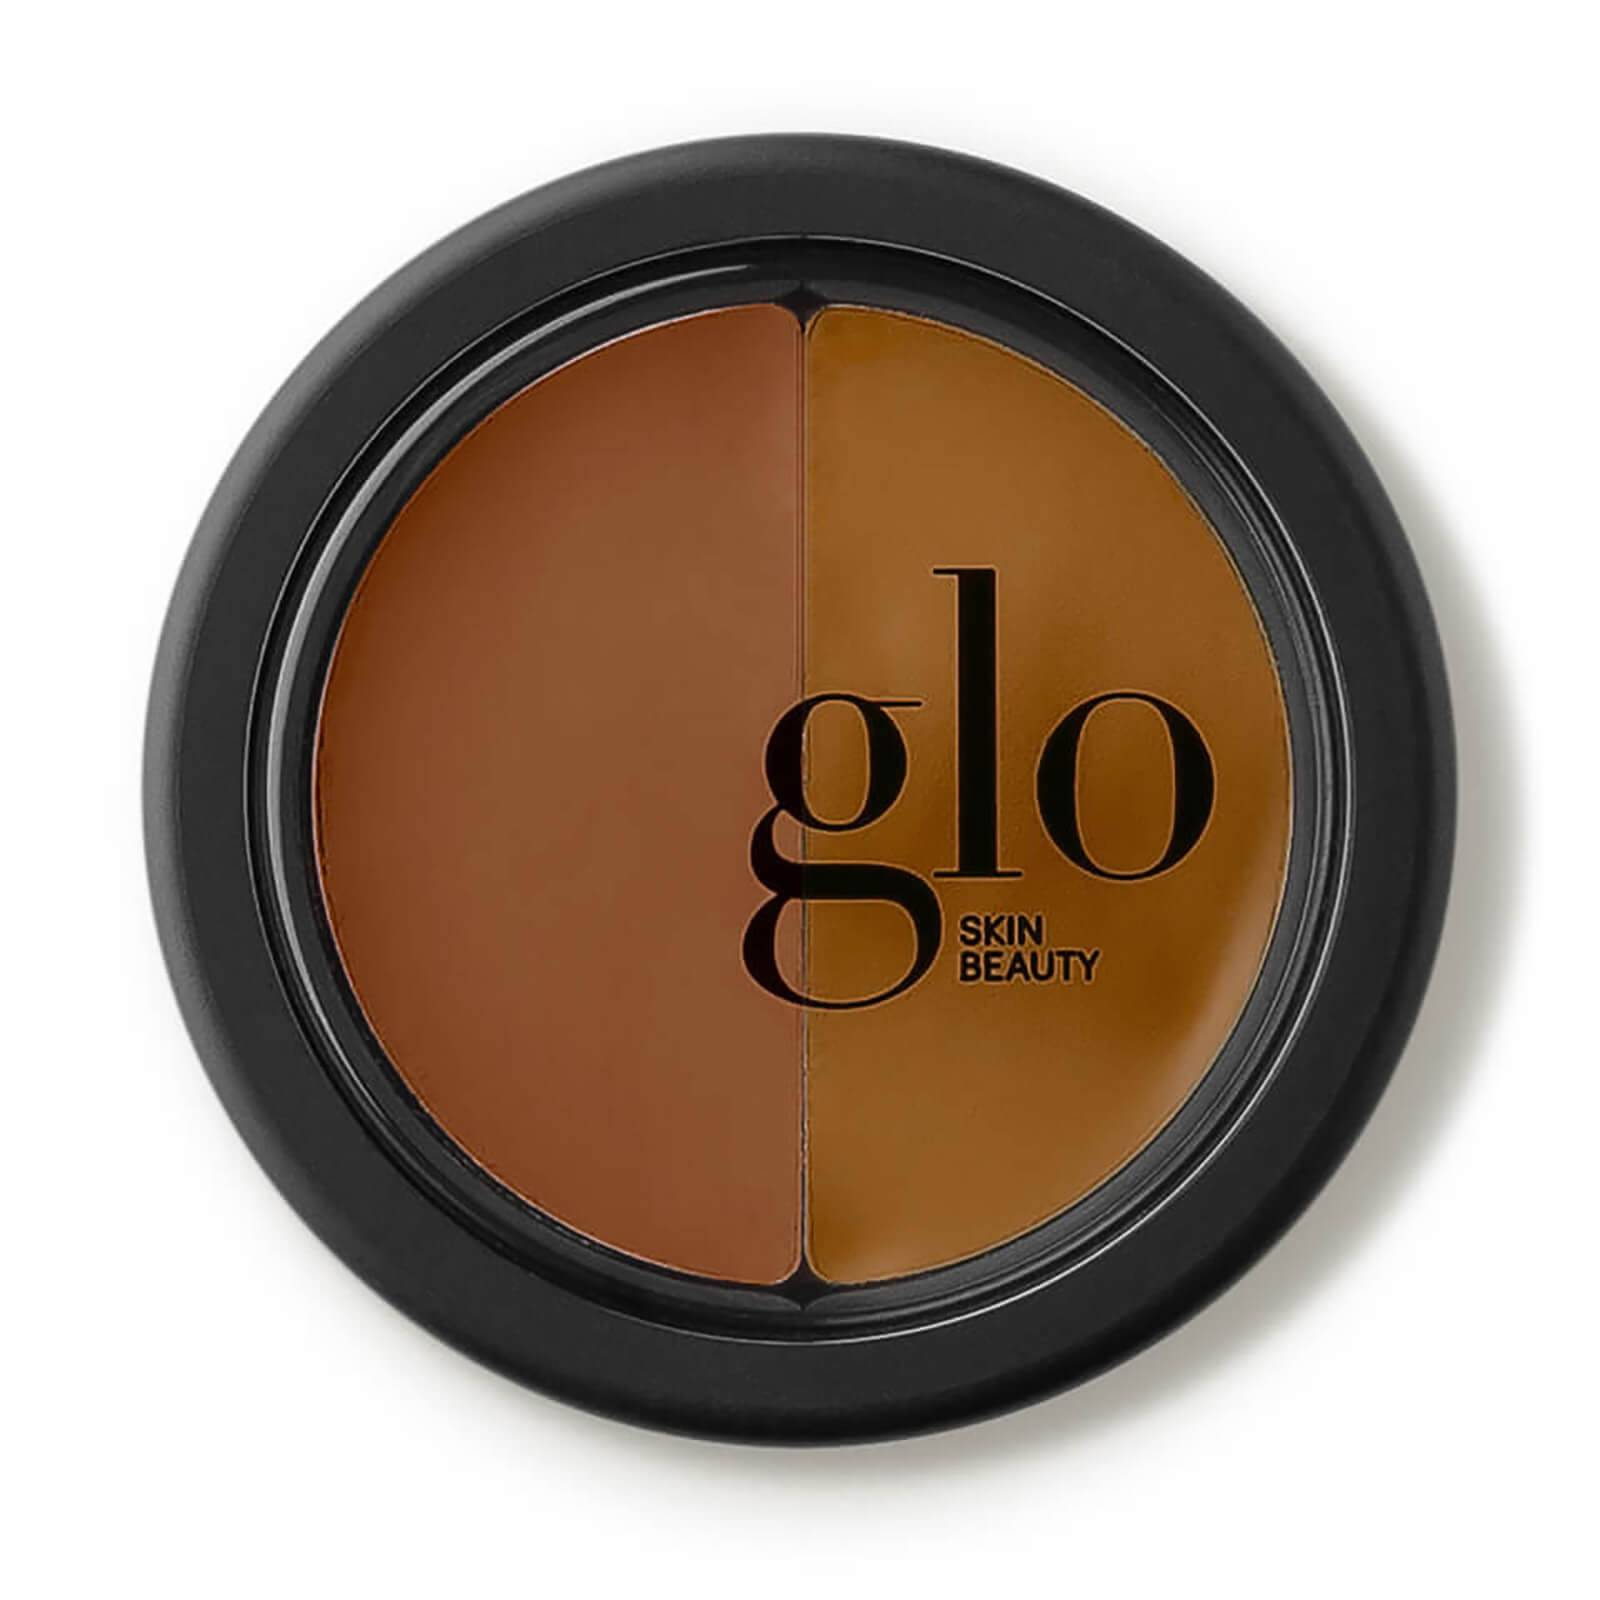 Glo Skin Beauty Under Eye Concealer (0.11 Oz.) In Tawny